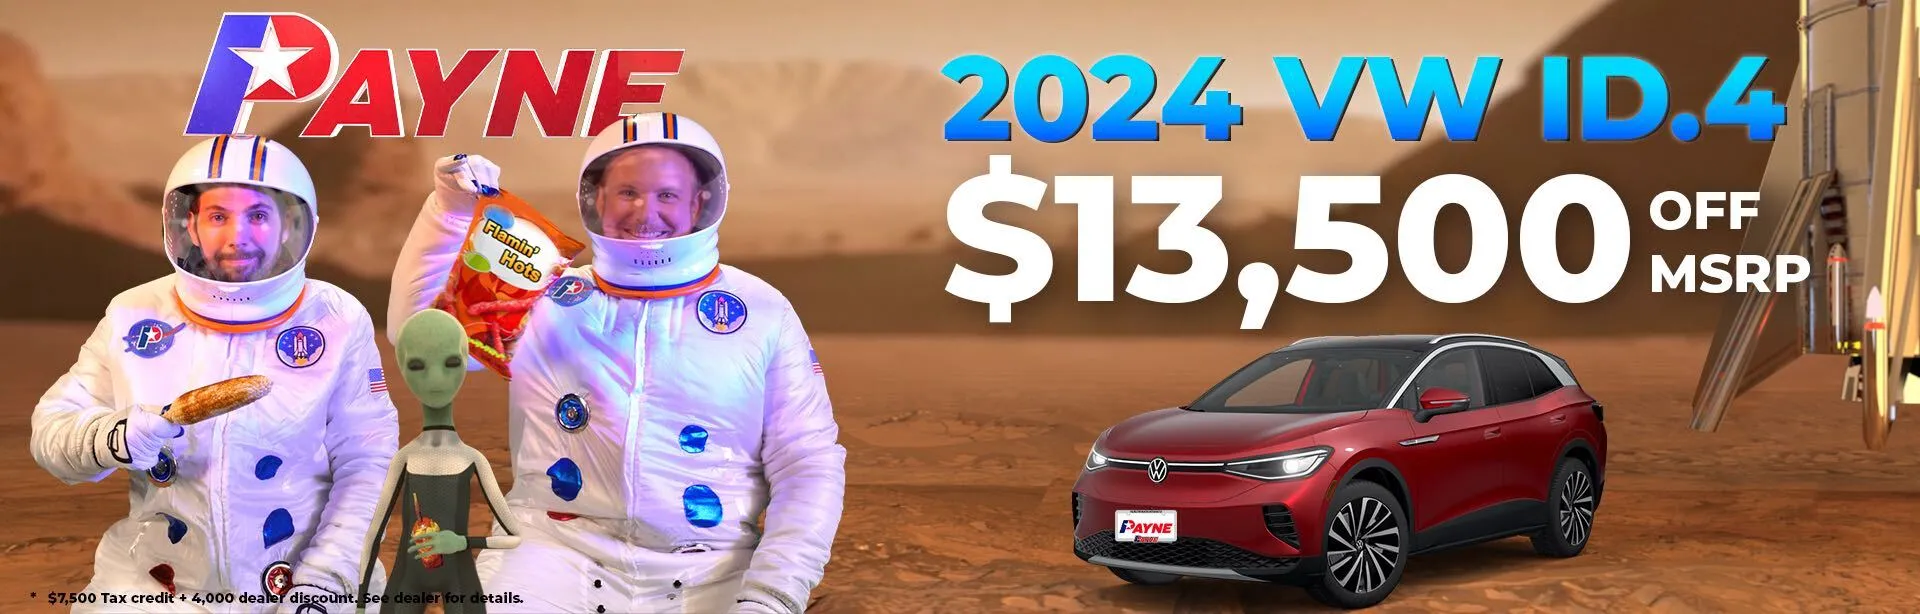 Get $13,500 off MSRP on a 2024 Volkswagen ID.4